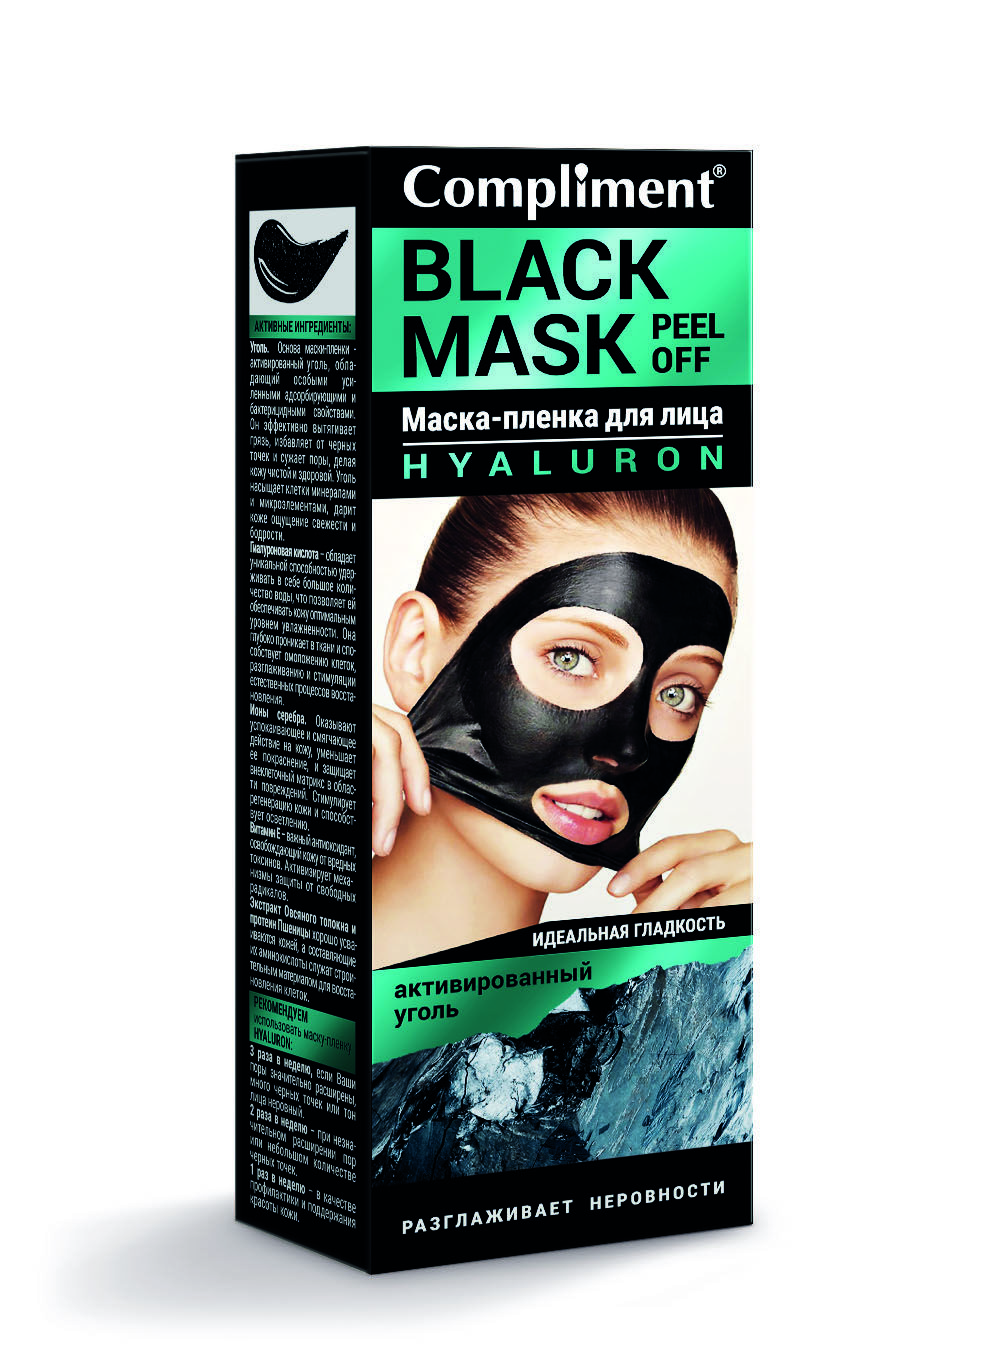 Compliment Black Mask маска-пленка для лица Pro-Collagen 80мл 80 мл. Compliment Black Mask маска-пленка для лица Pro-Collagen 80мл. Compliment Black Mask маска-пленка для лица коллаген, 80 мл. Compliment Black Mask маска-пленка для лица co-Enzymes 80мл. Купить маску compliment